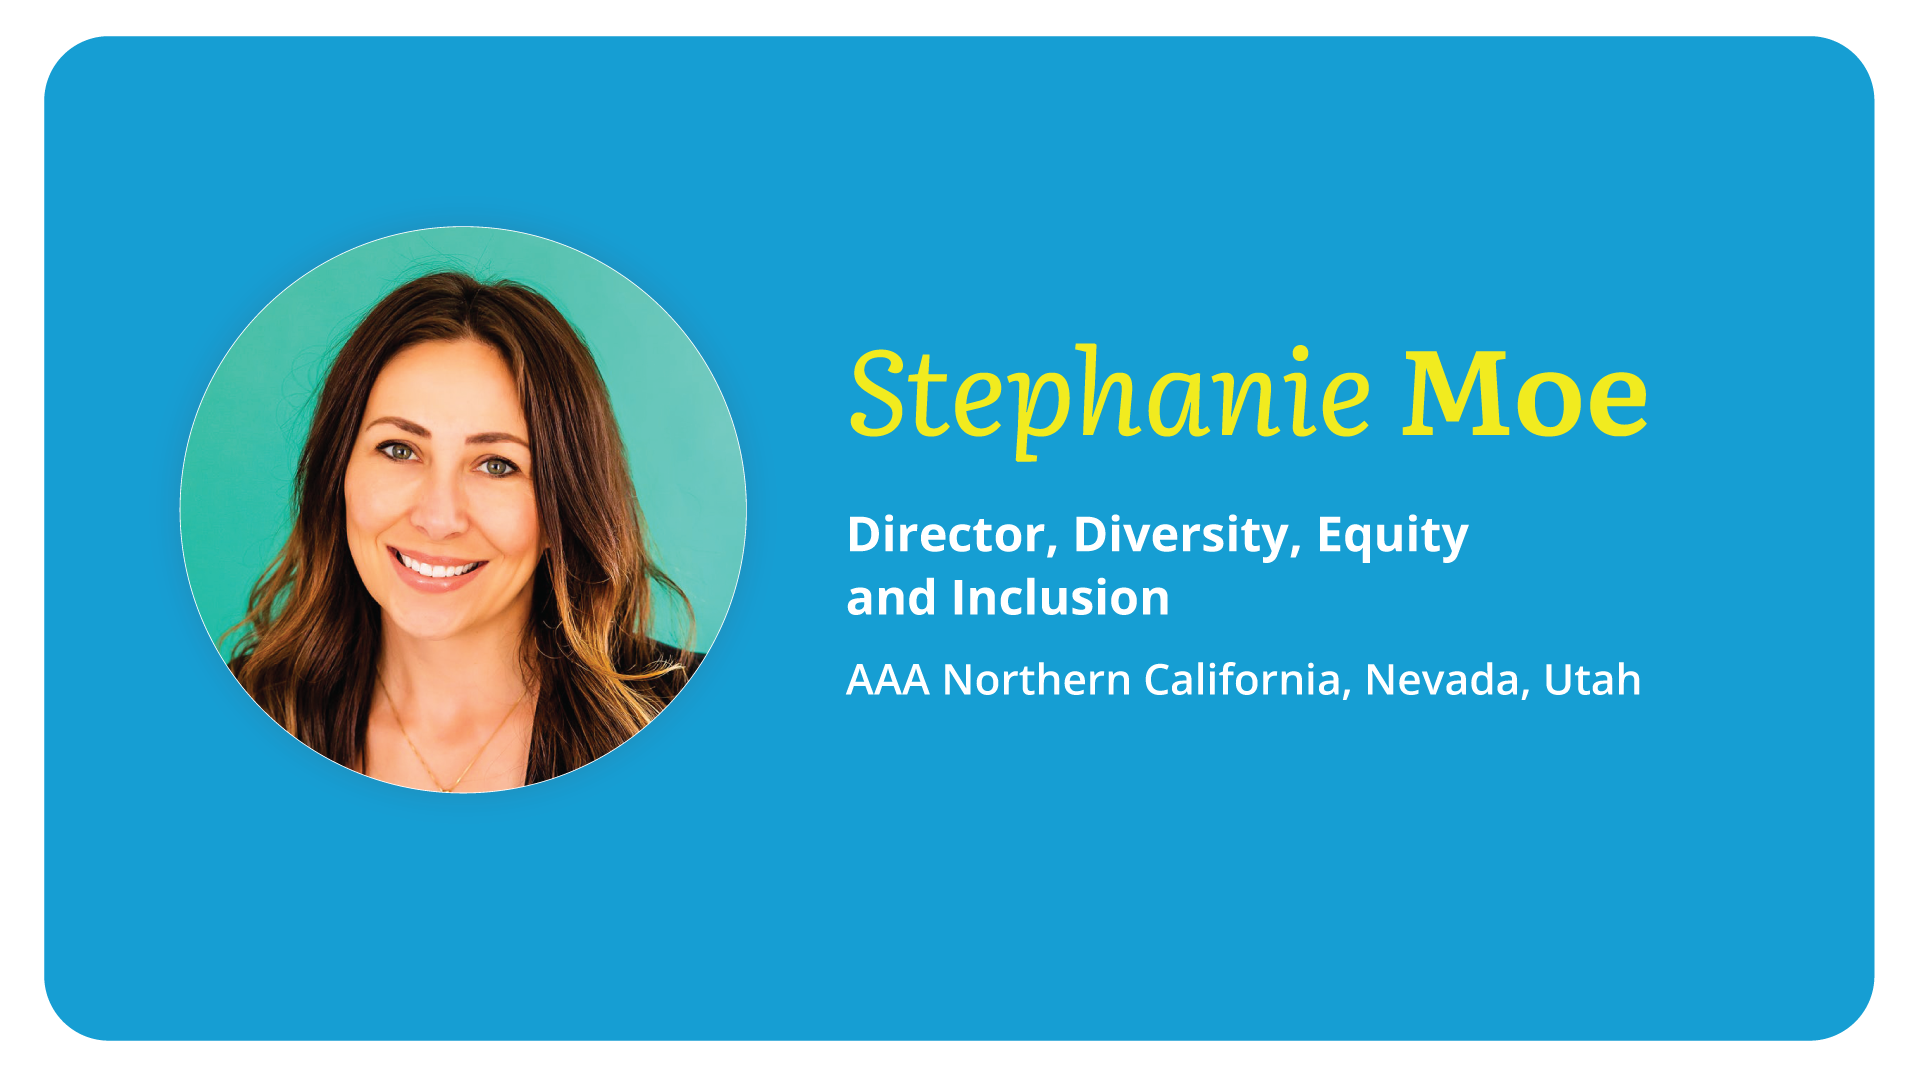 Purpose Hero Stephanie Moe - AAA Northern California, Nevada, Utah